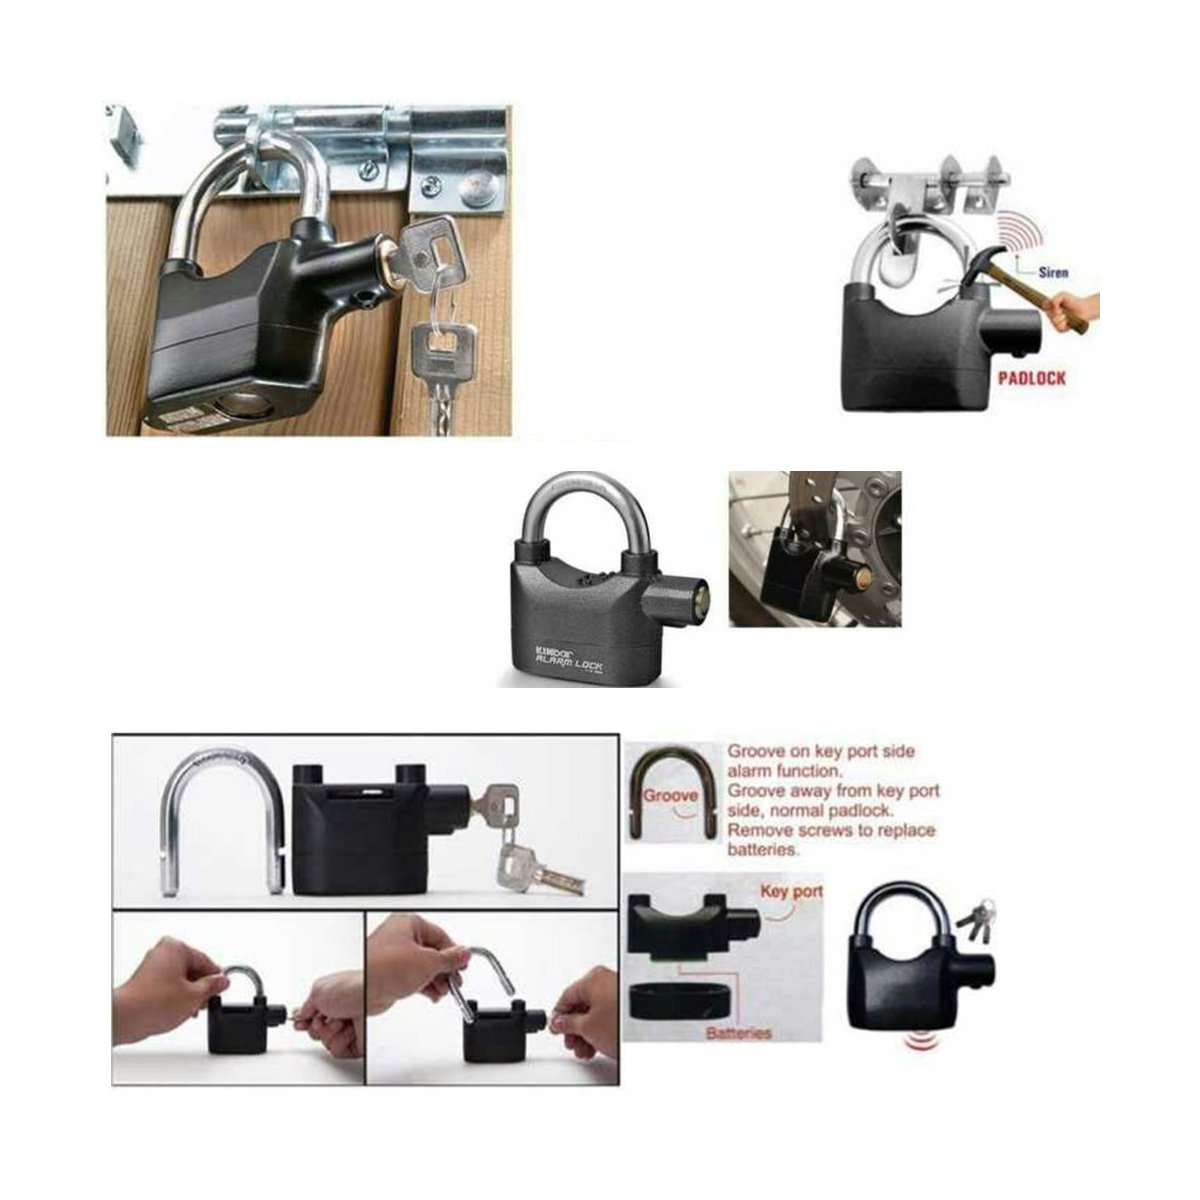 security-pad-lock-with-smart-alarm-safety-lock-black